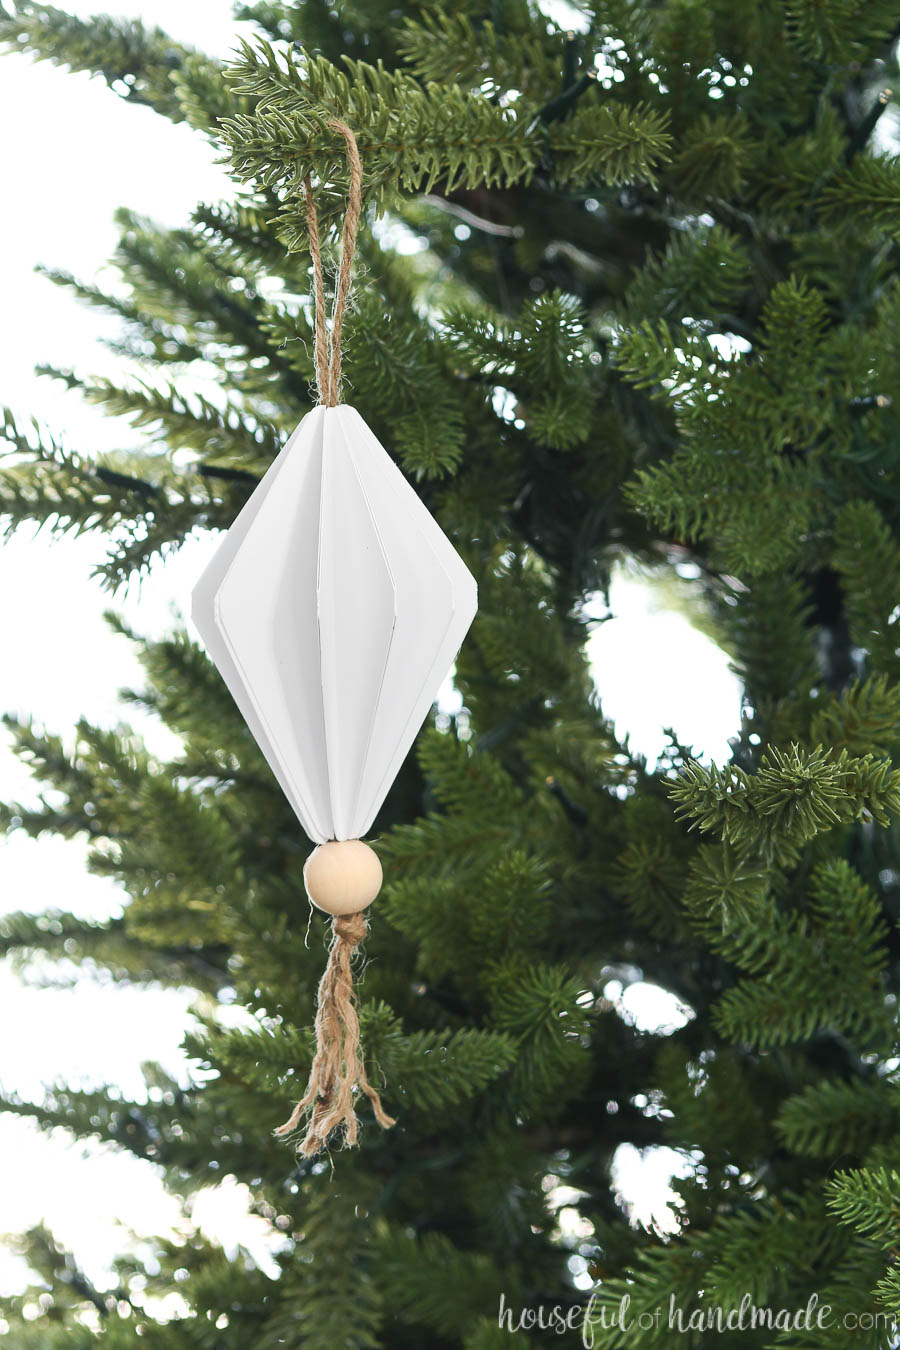 Diamond shaped paper Christmas ornament hanging on a Christmas tree.